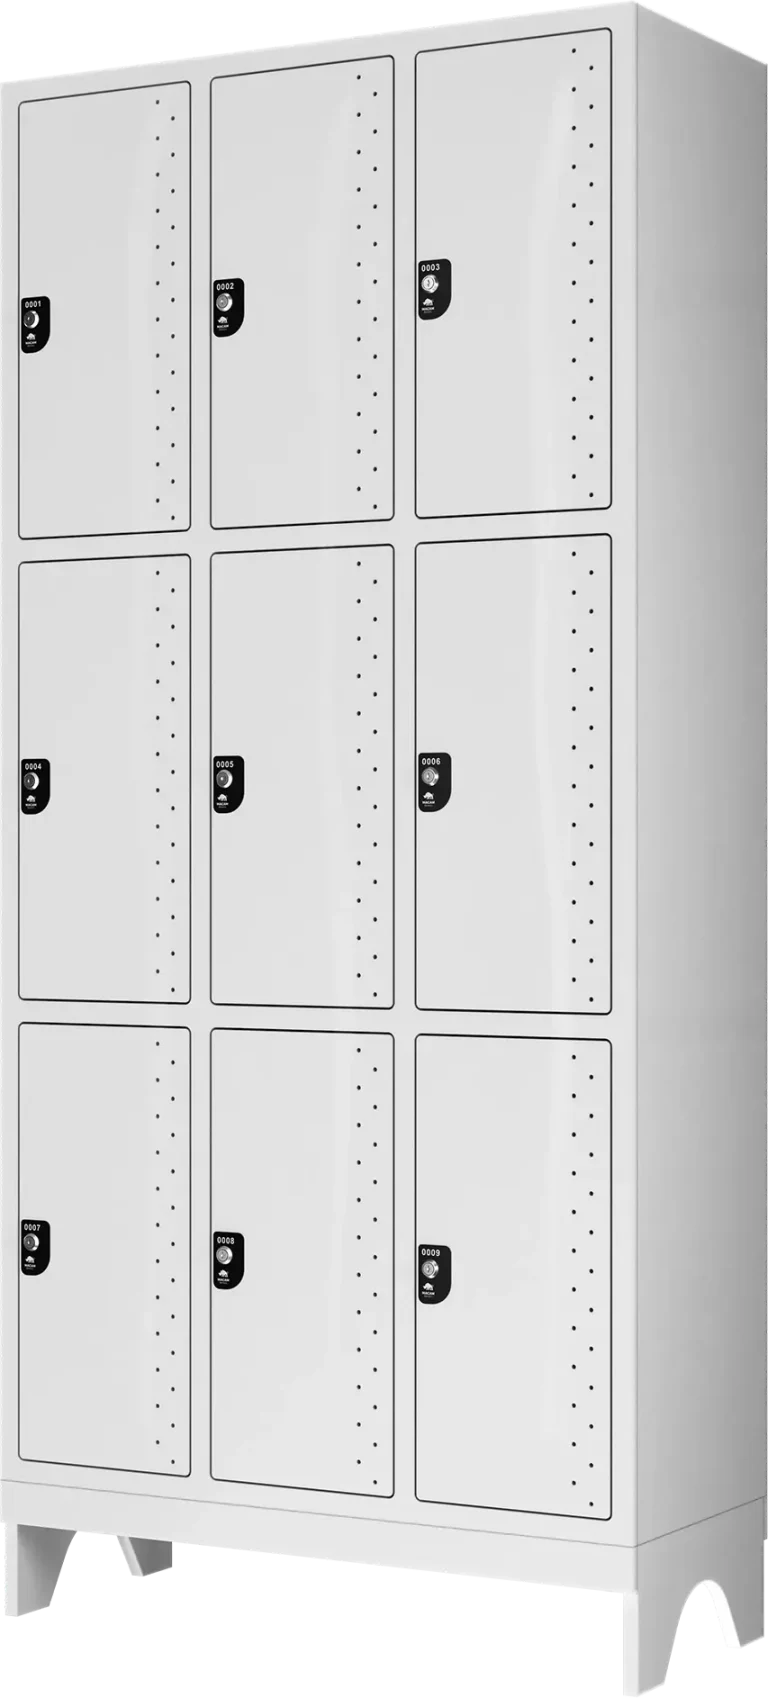 armario roupeiro 9 portas macam brasil feito em plastico de engenharia alta resistencia ideal para frigorificos nao enferruja vertical111